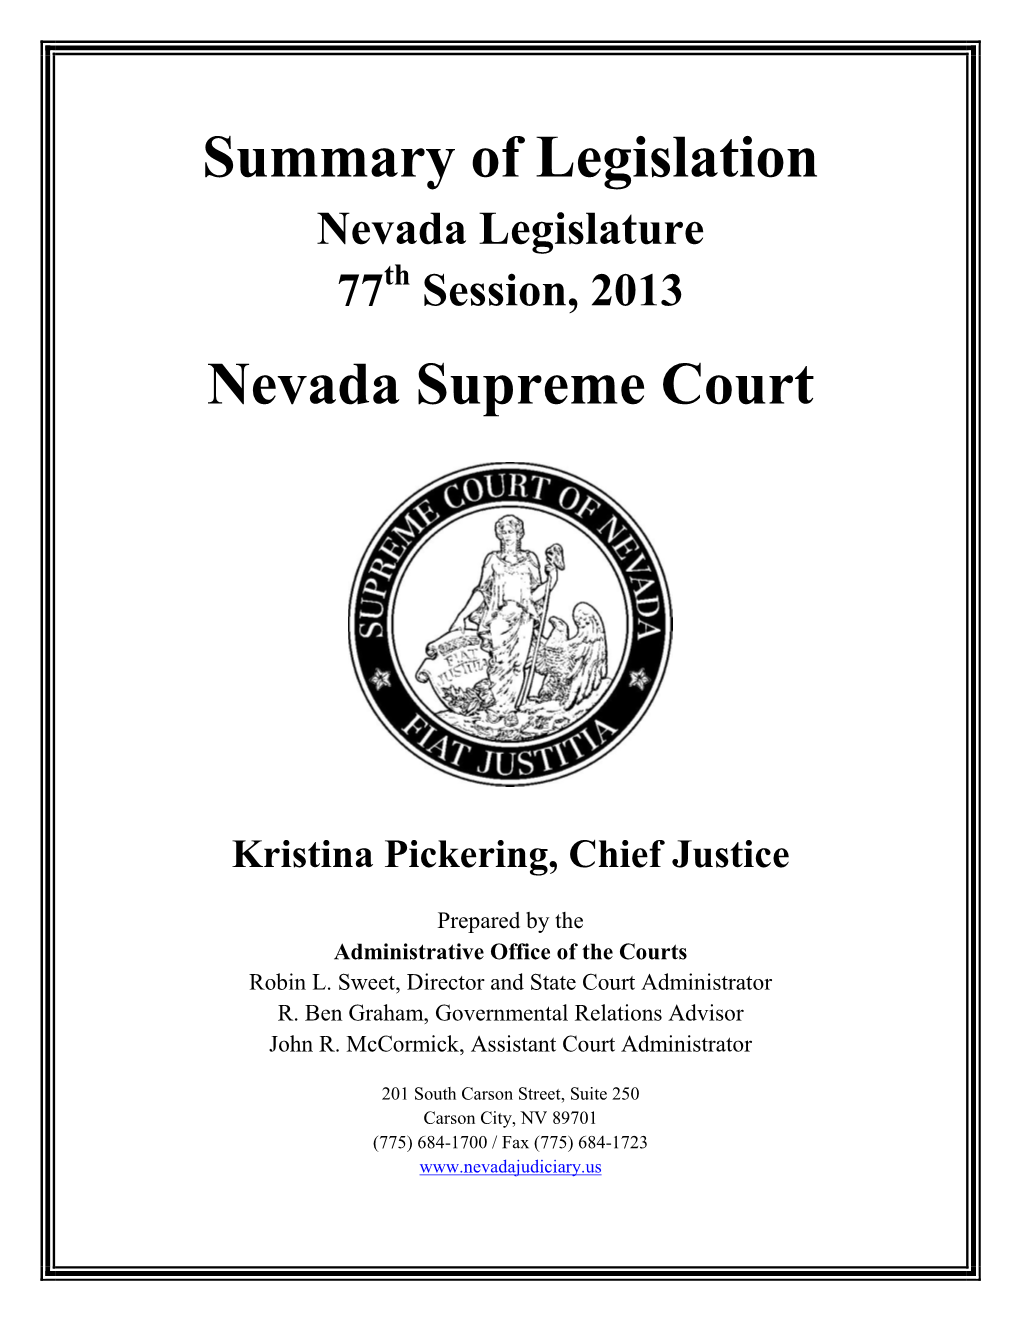 Summary of Legislation Nevada Supreme Court